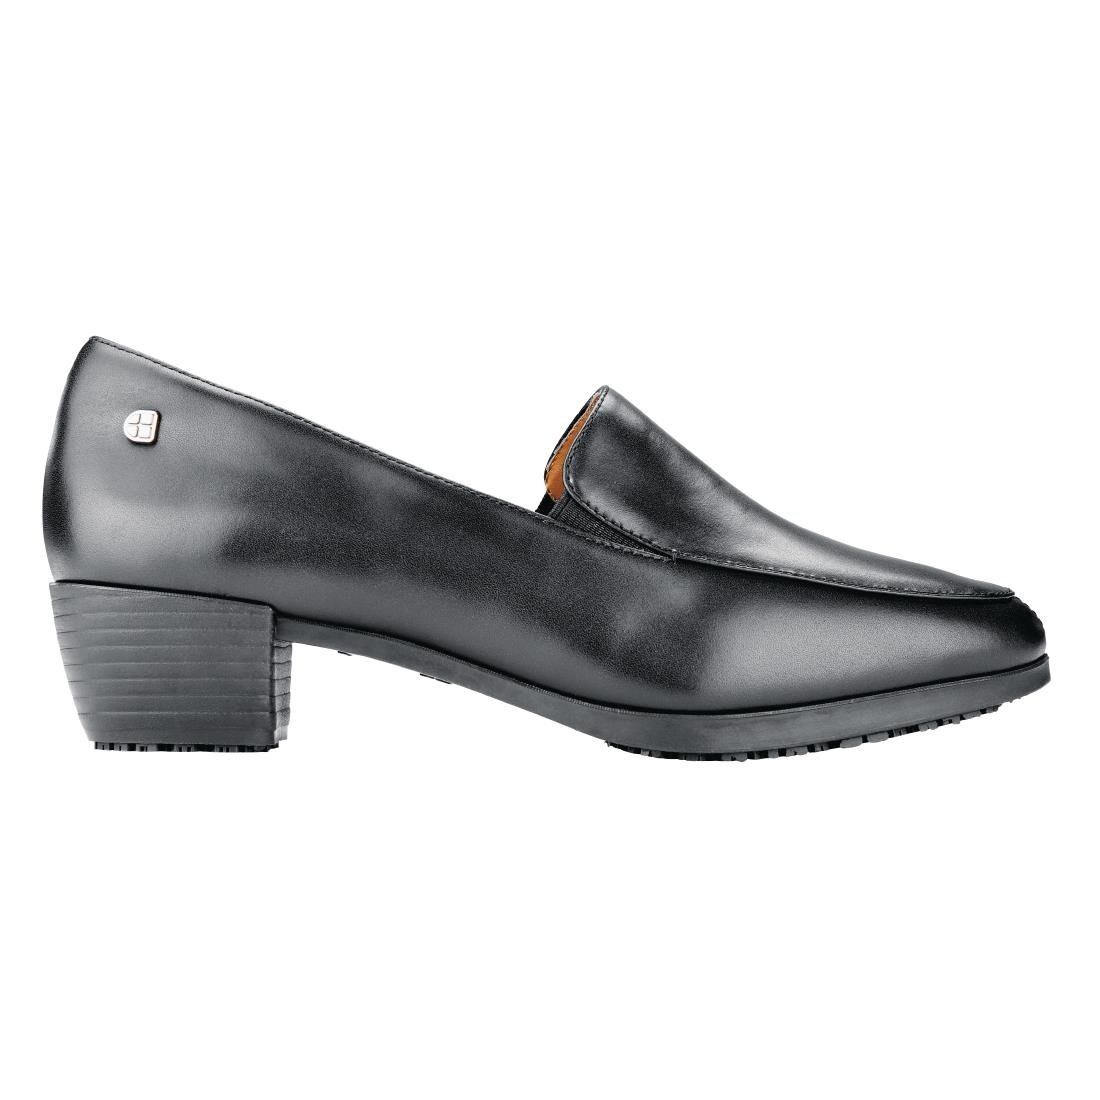 BB605-37 Shoes for Crews Envy Slip On Dress Shoe Black Size 37